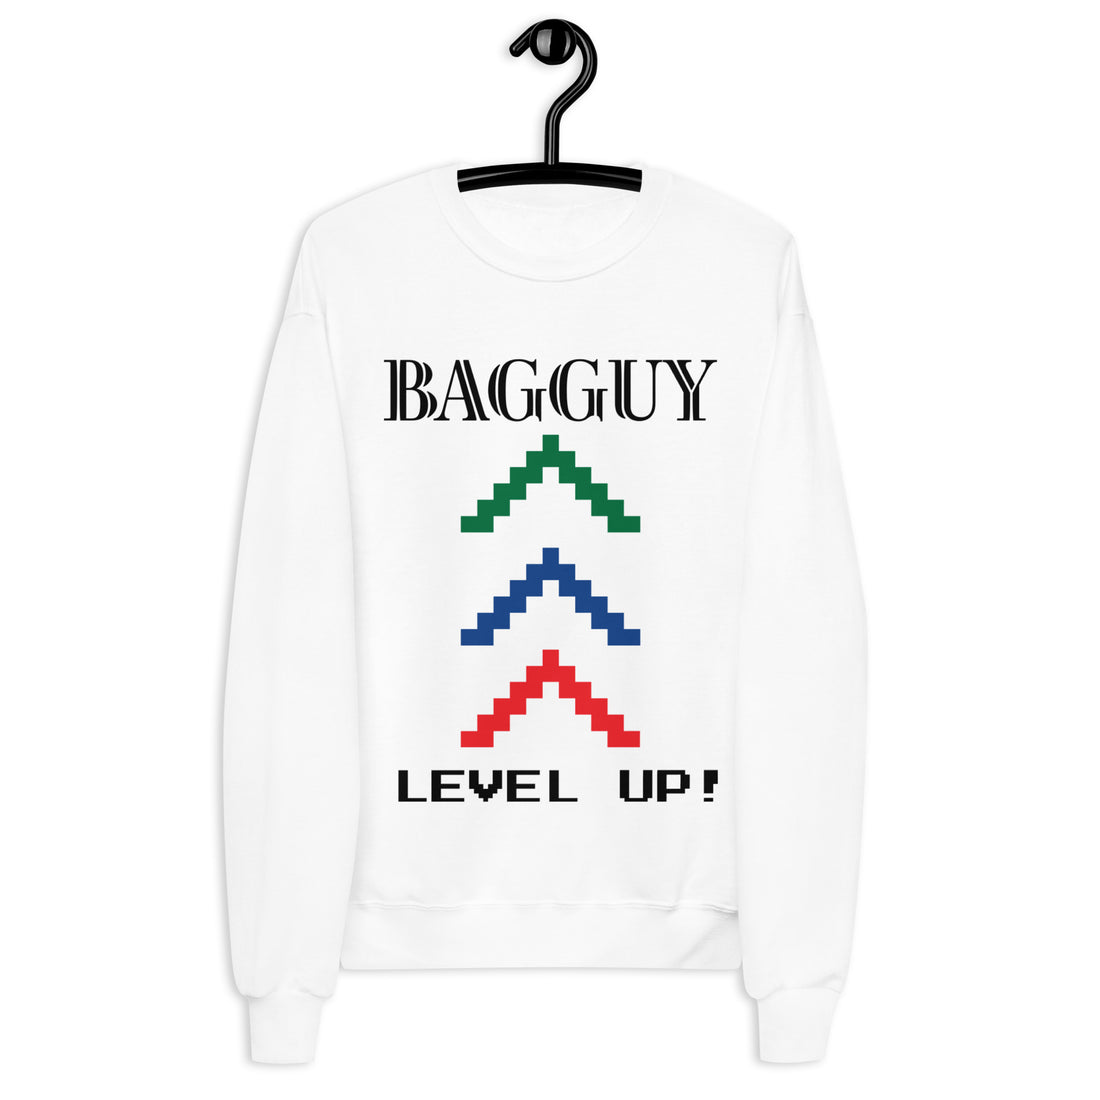 Bagguy- Special Edition Unisex fleece sweatshirt